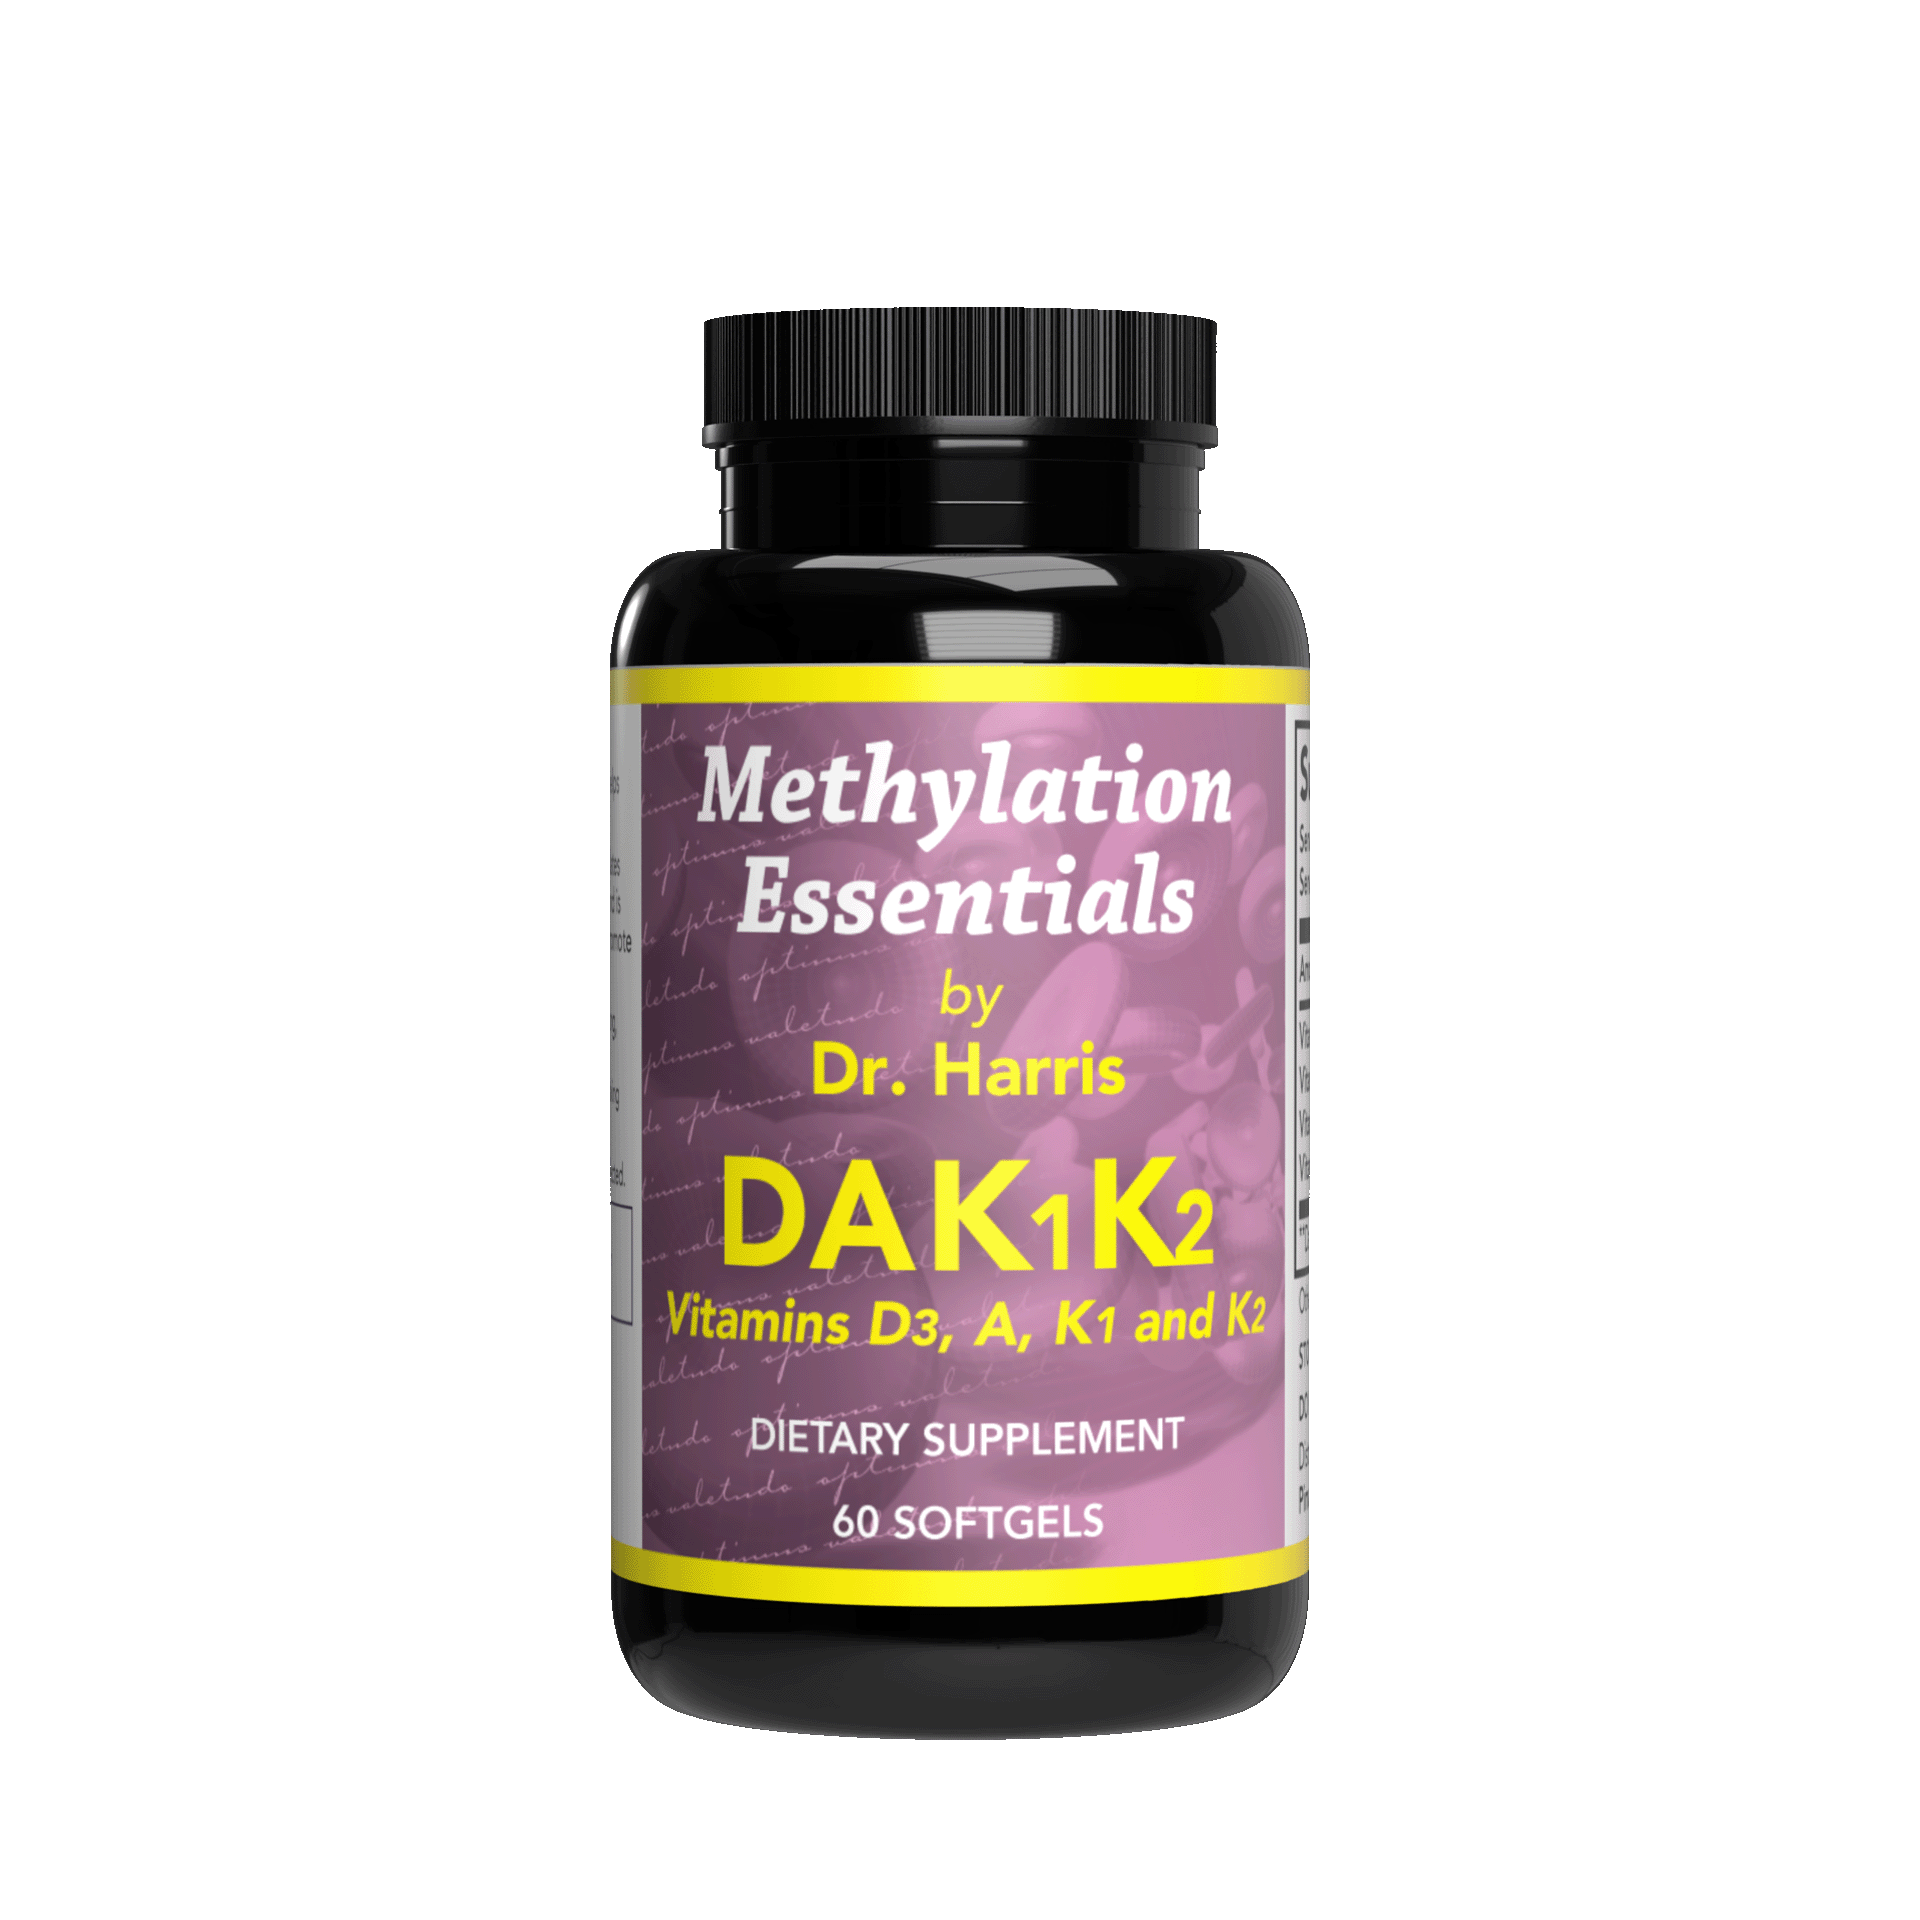 Image of a bottle of Essentials DAK1K2.